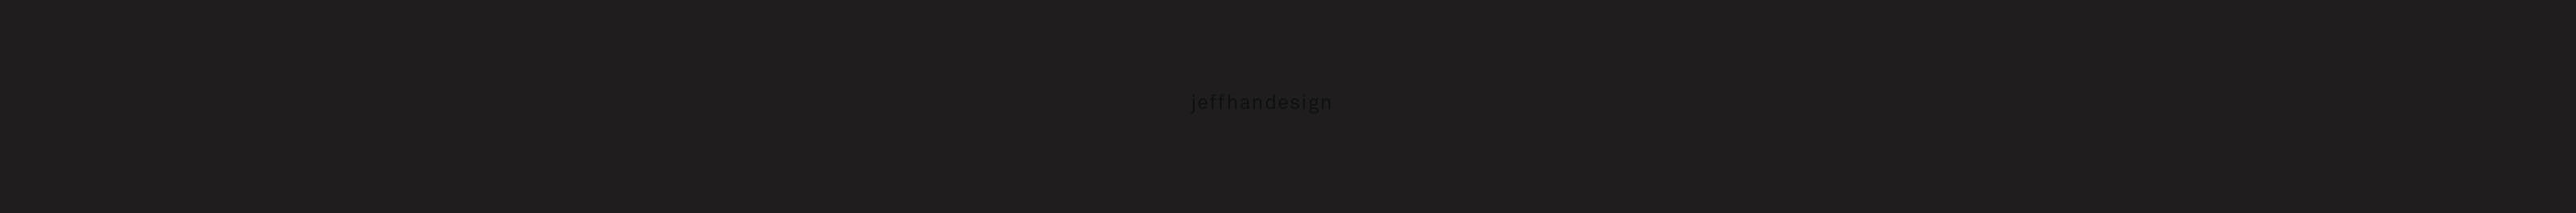 Jeff Han's profile banner